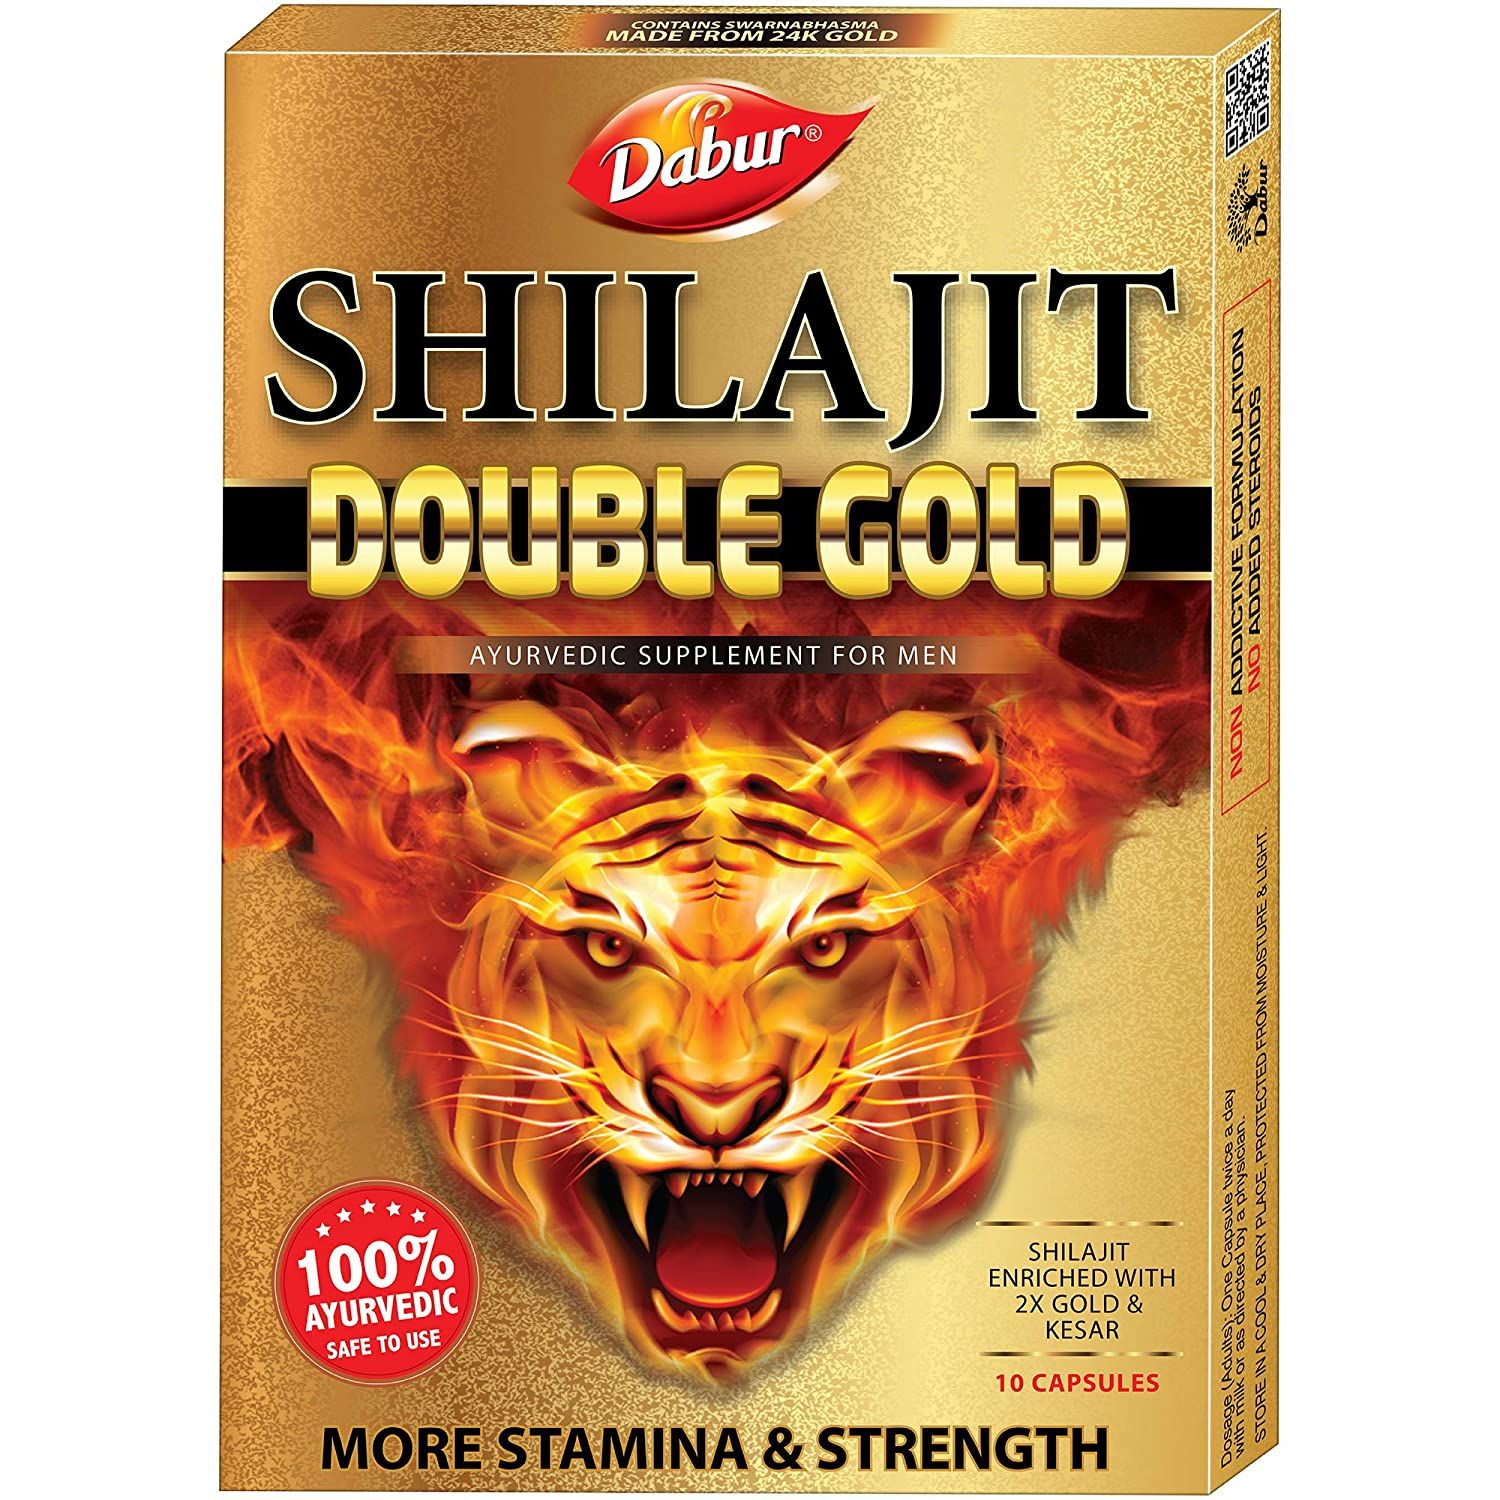 Dabur Shilajit Double Gold Image